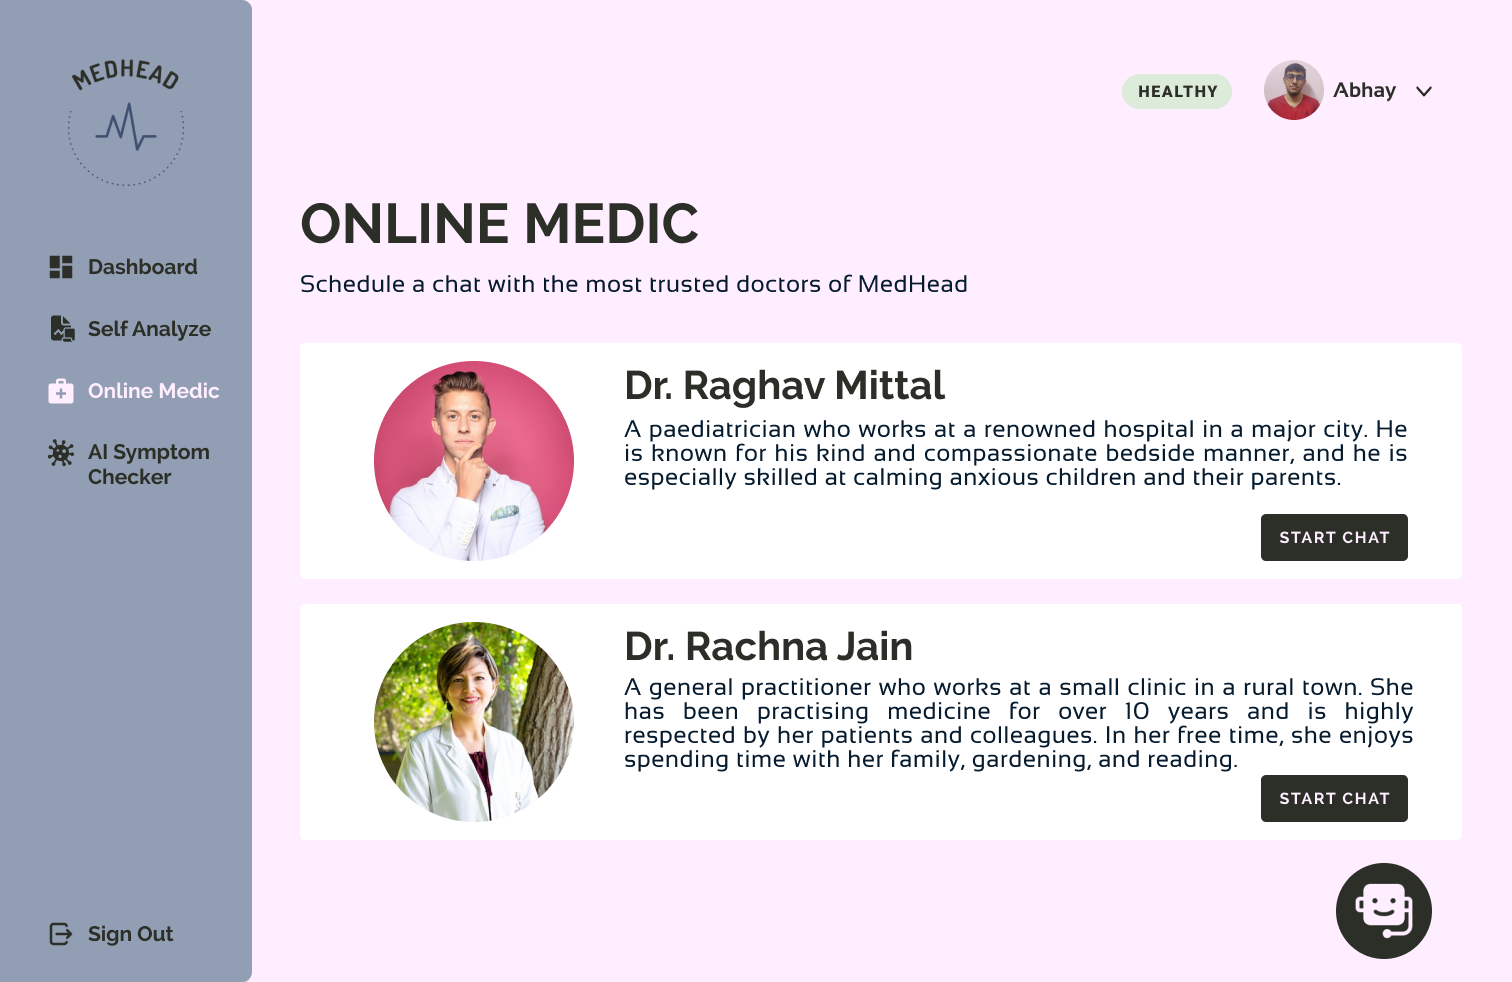 Online medic image